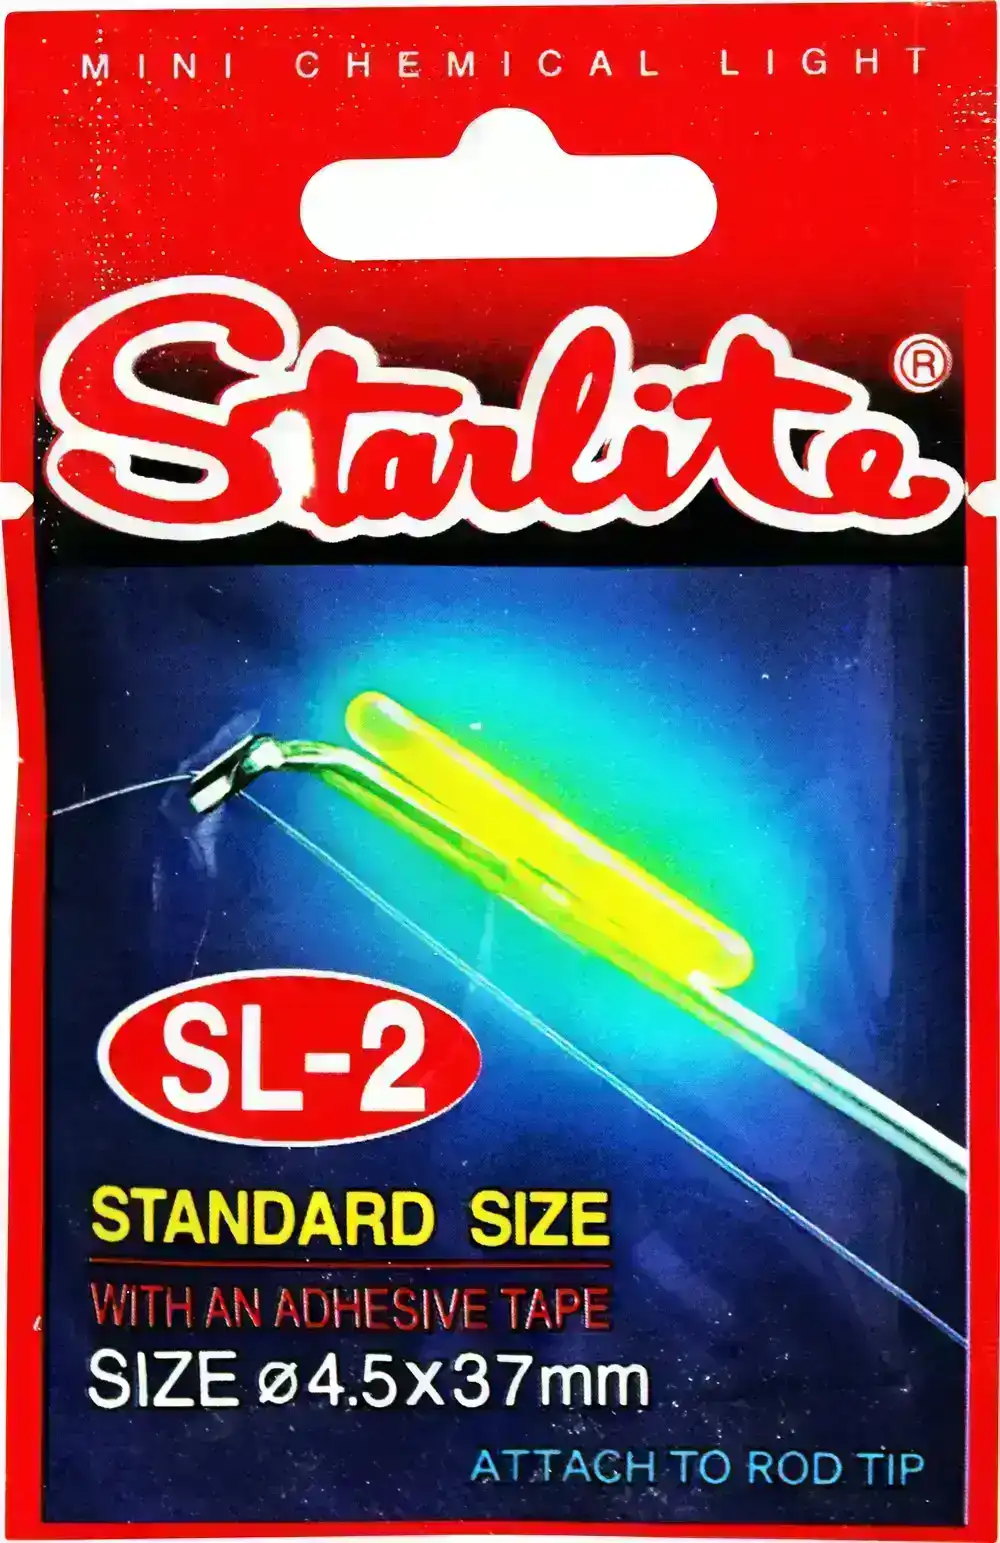 37mm Starlite Chemical Fishing Light with Tape - SL-2 Fluoro Glow Stick Light